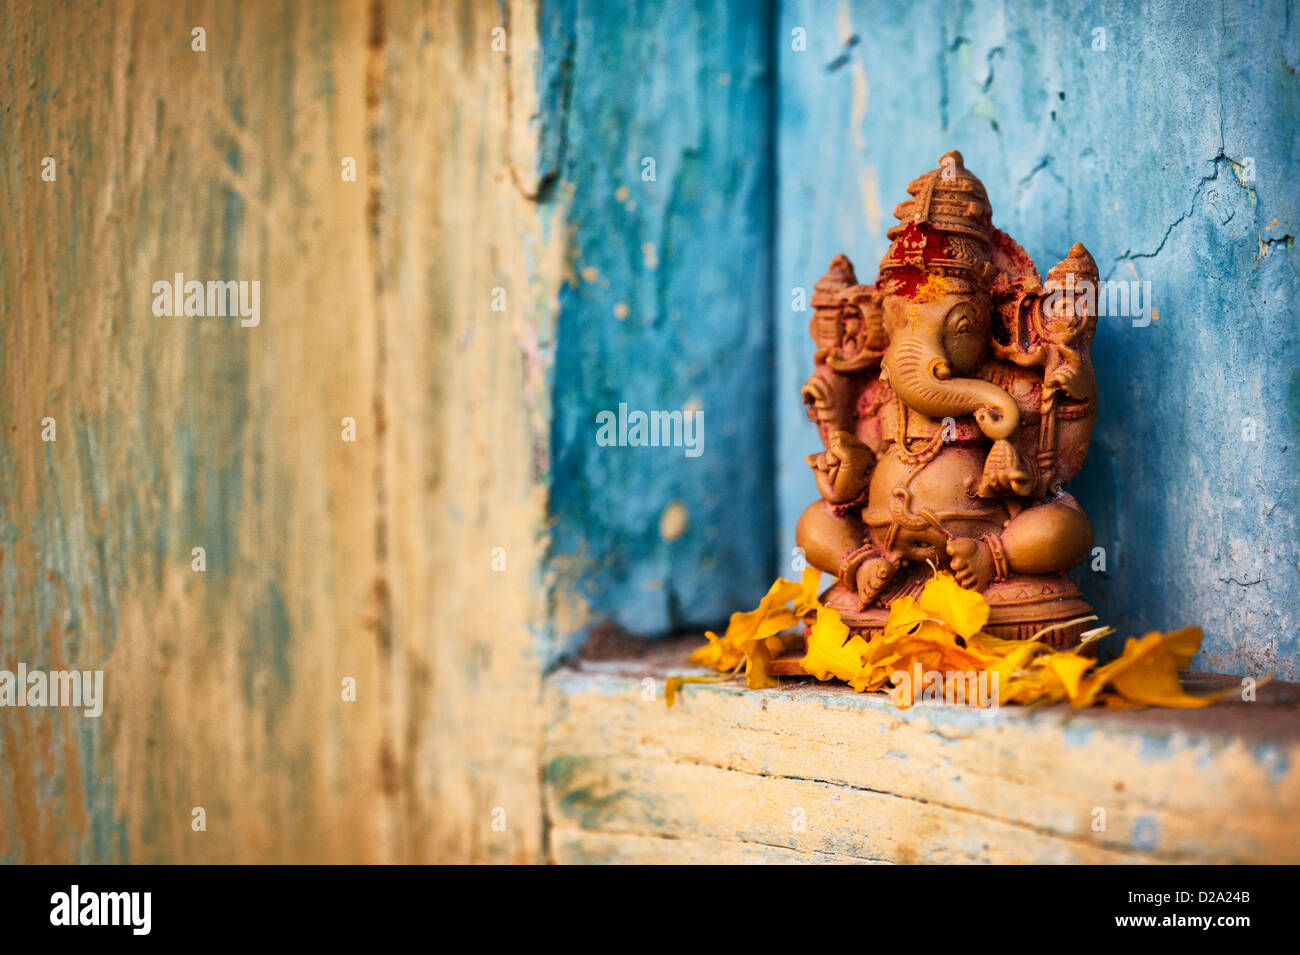 Hindu Elephant God. Lord Ganesha statue in and Indian house window Stock Photo